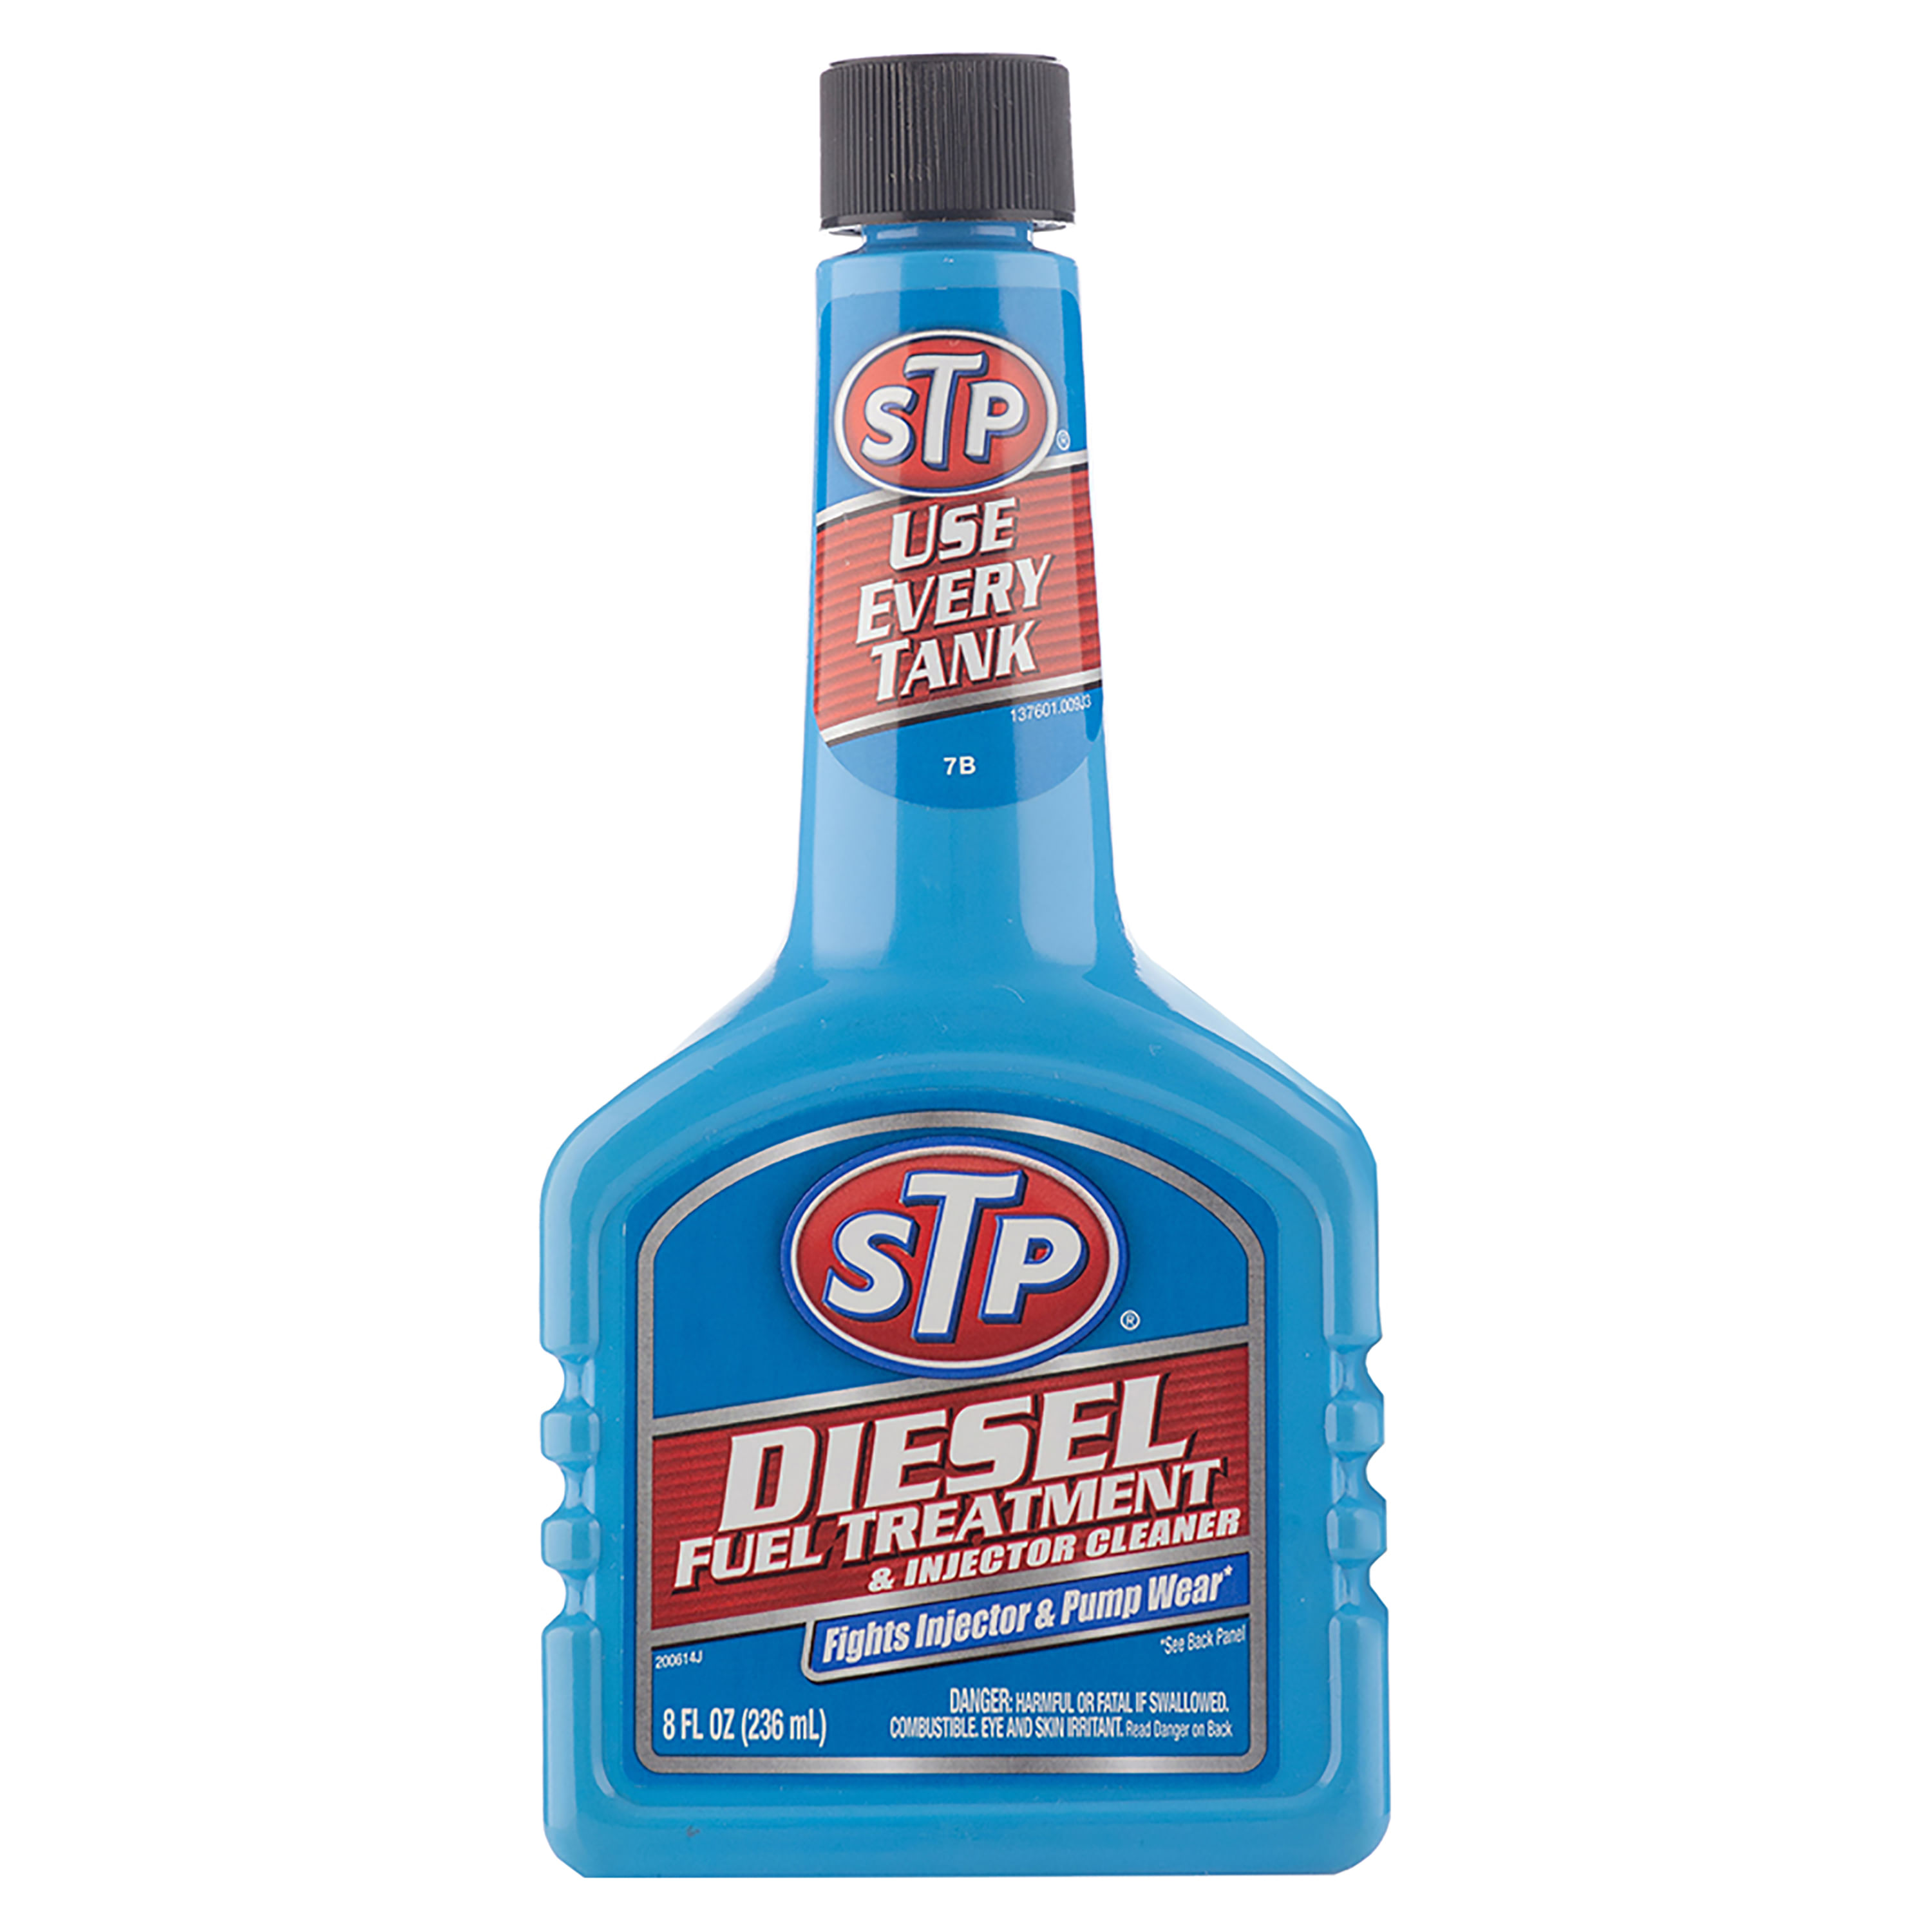 STP® Limpia Inyectores gasolina